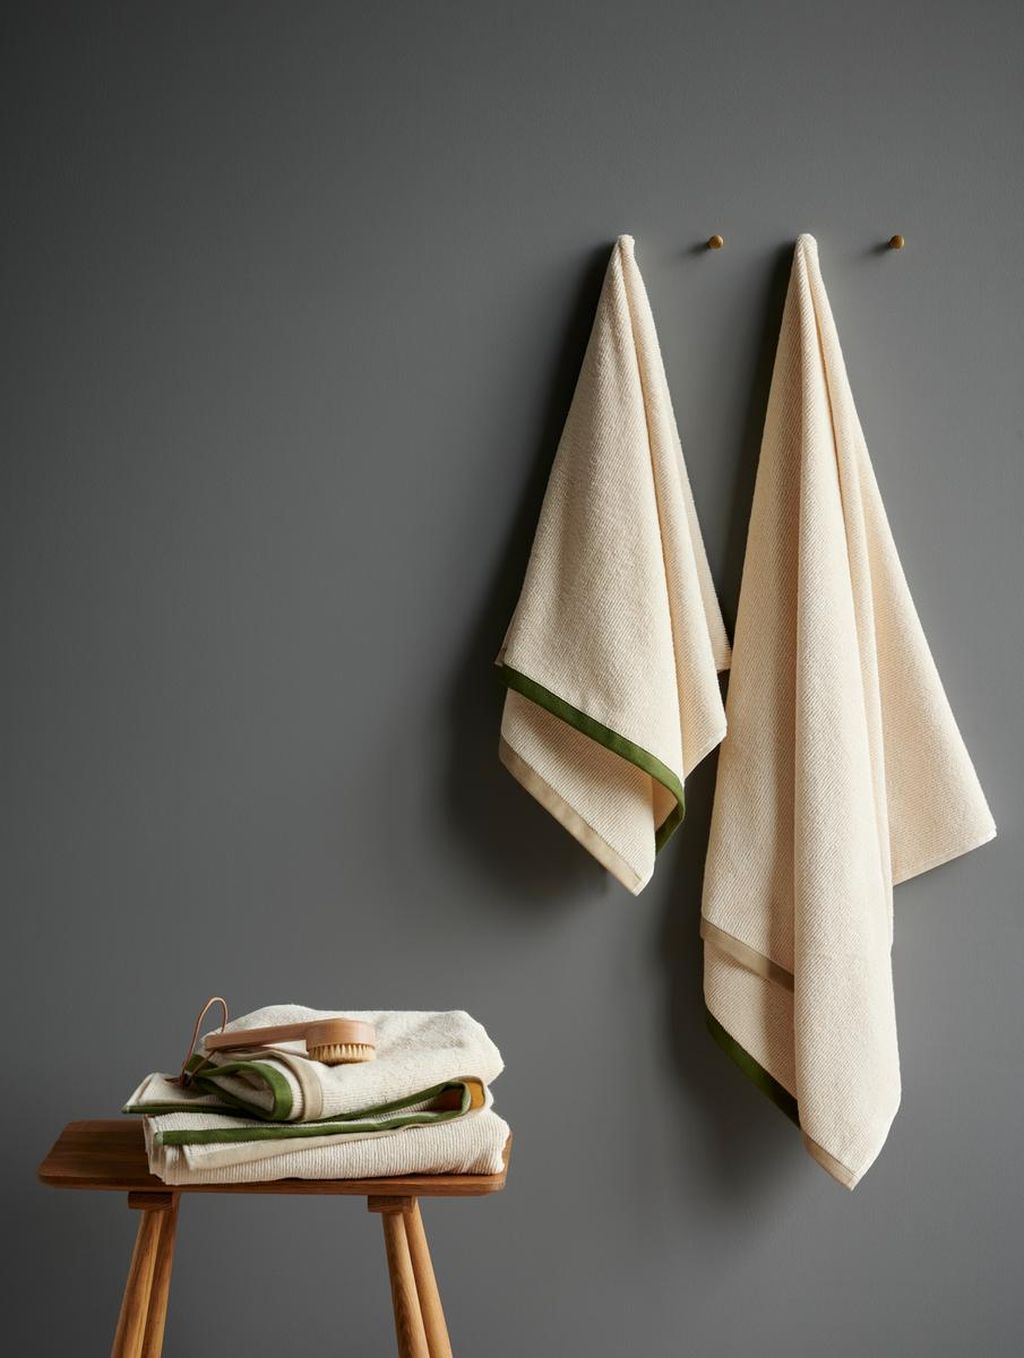 Södahl Contrast Towel 50x70, Toffee Brown